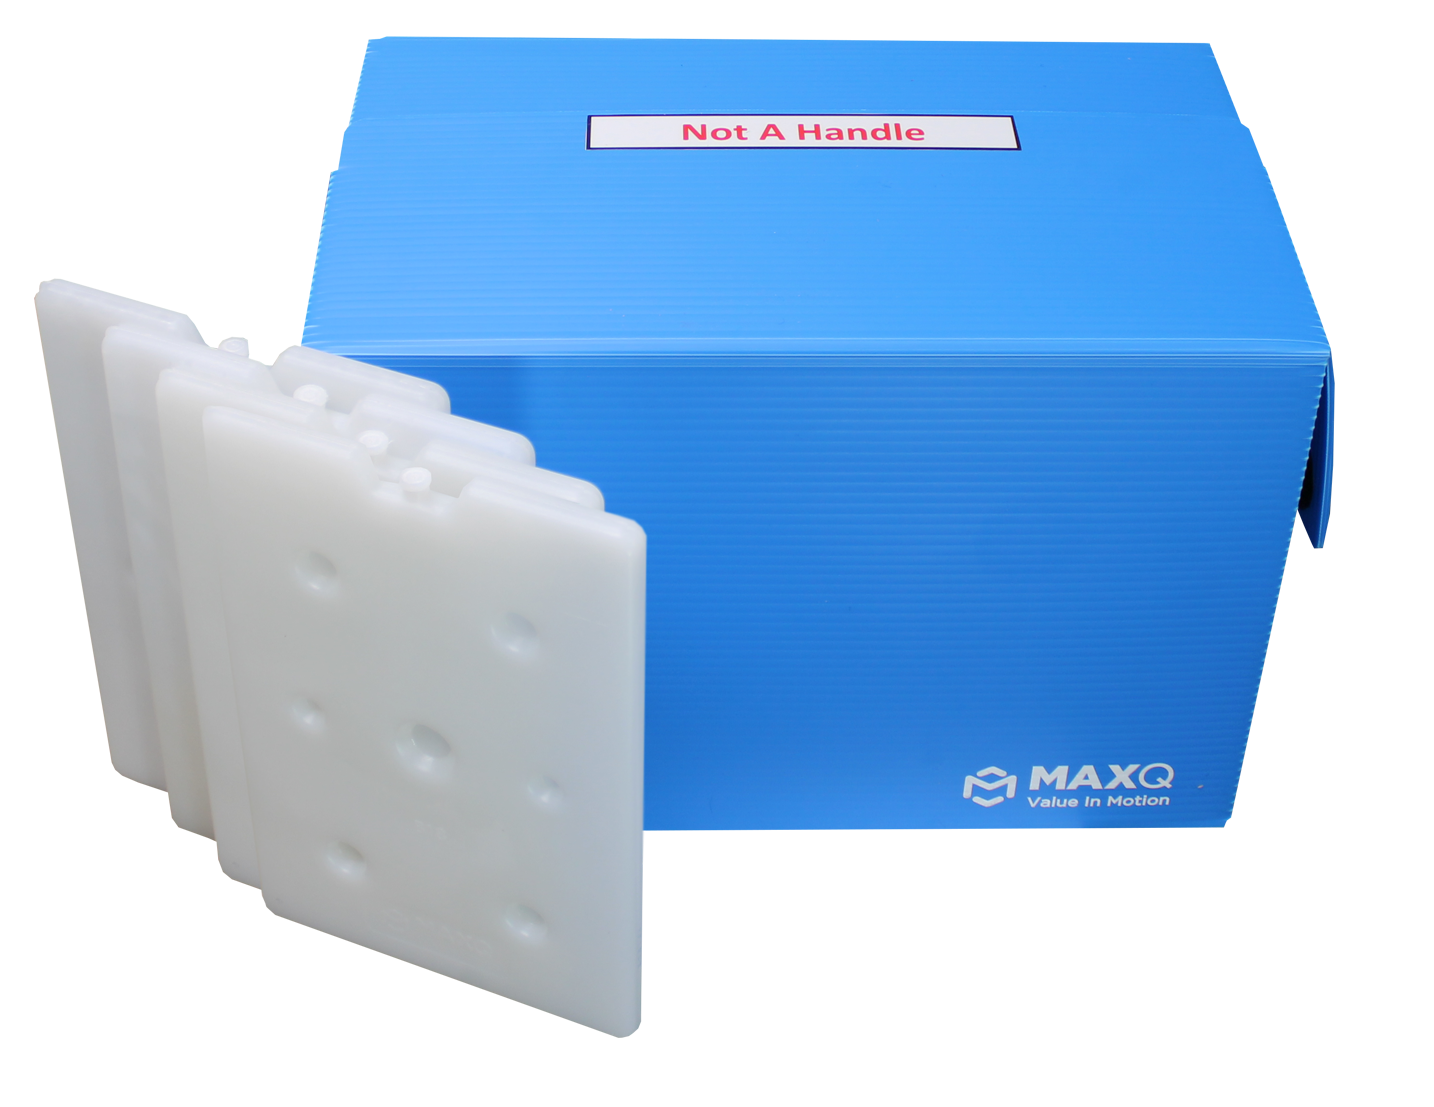 MaxQ MaxPlus Platelet Shipper